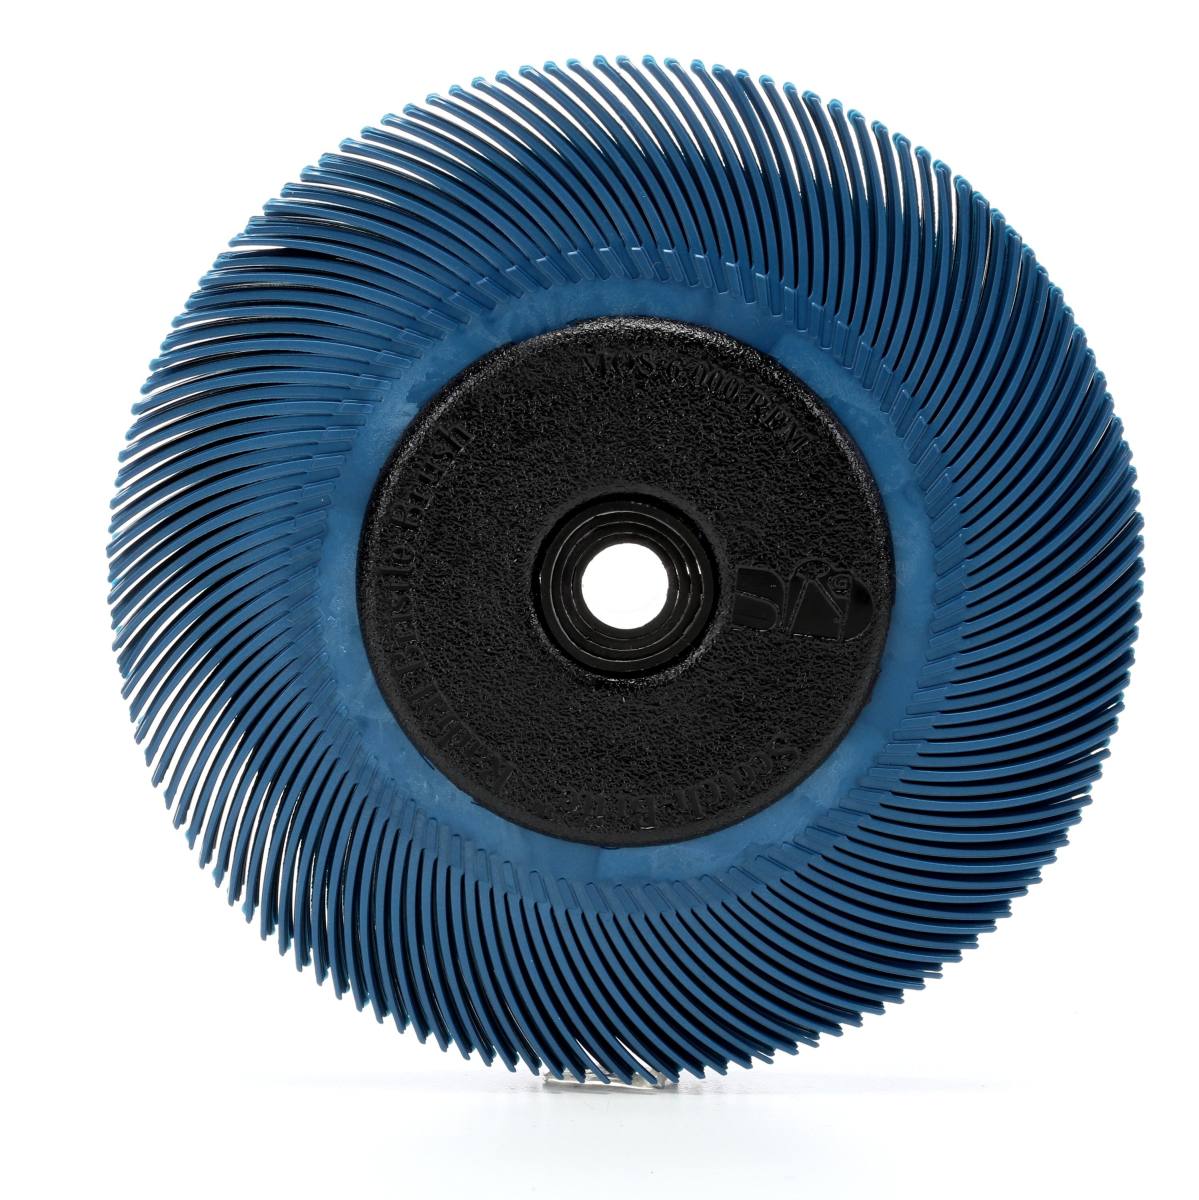 3M Scotch-Brite radiale borstelschijf BB-ZB met flens, blauw, 152,4 mm, P400, type C #33214